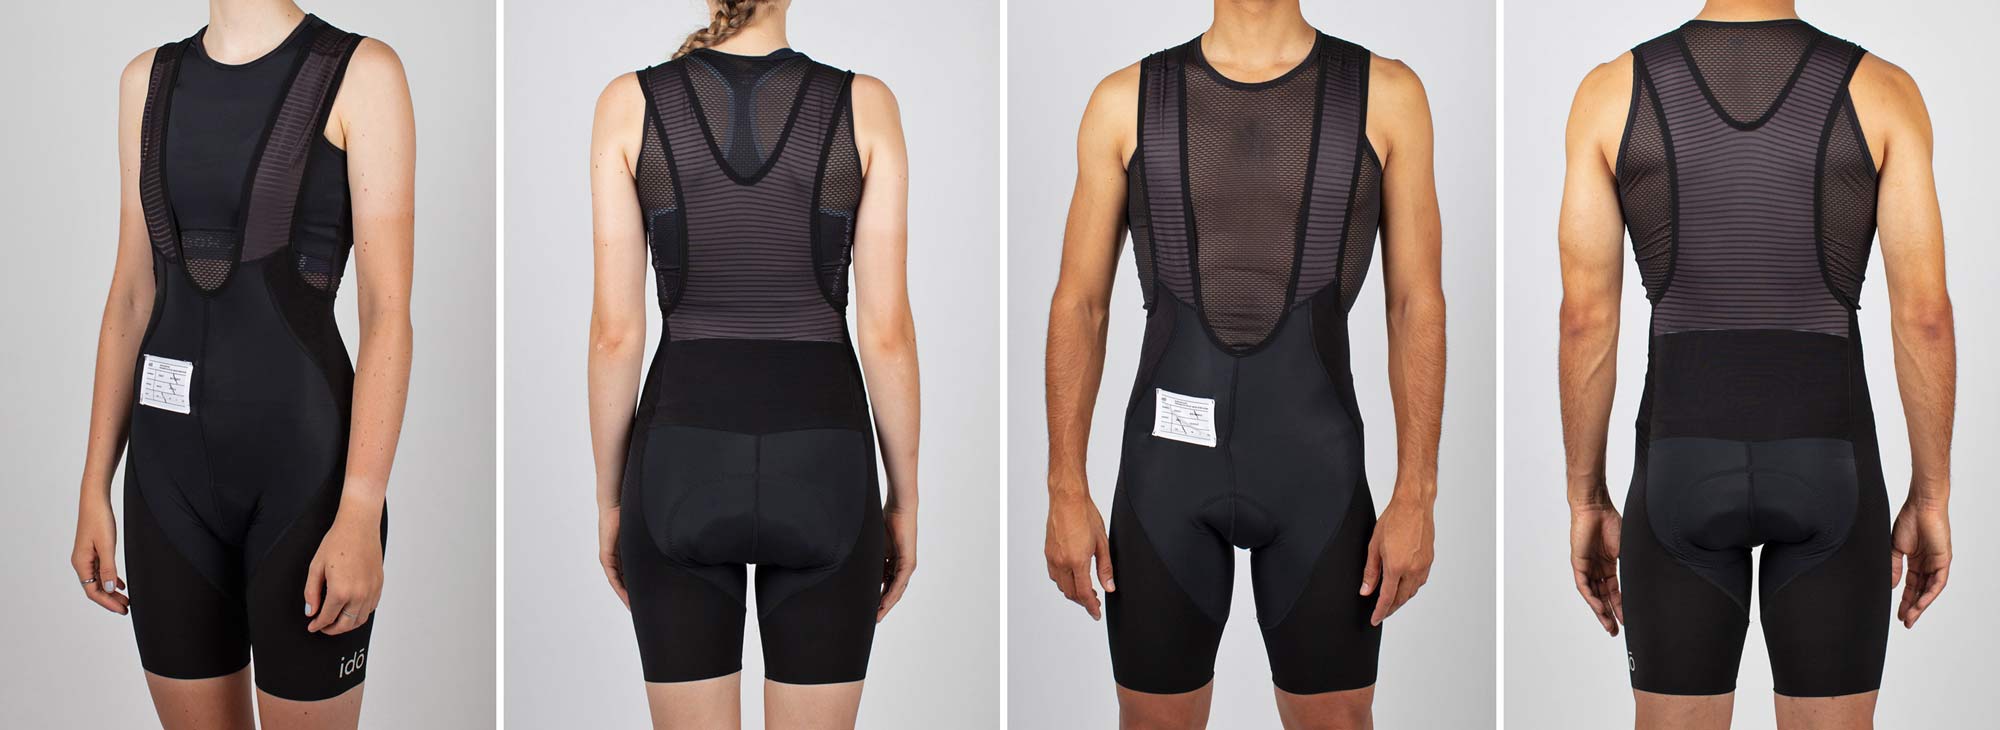 ido indoor cycling clothing, idō lightweight breathable indoor training virtual racing kit for men & women, bib shorts